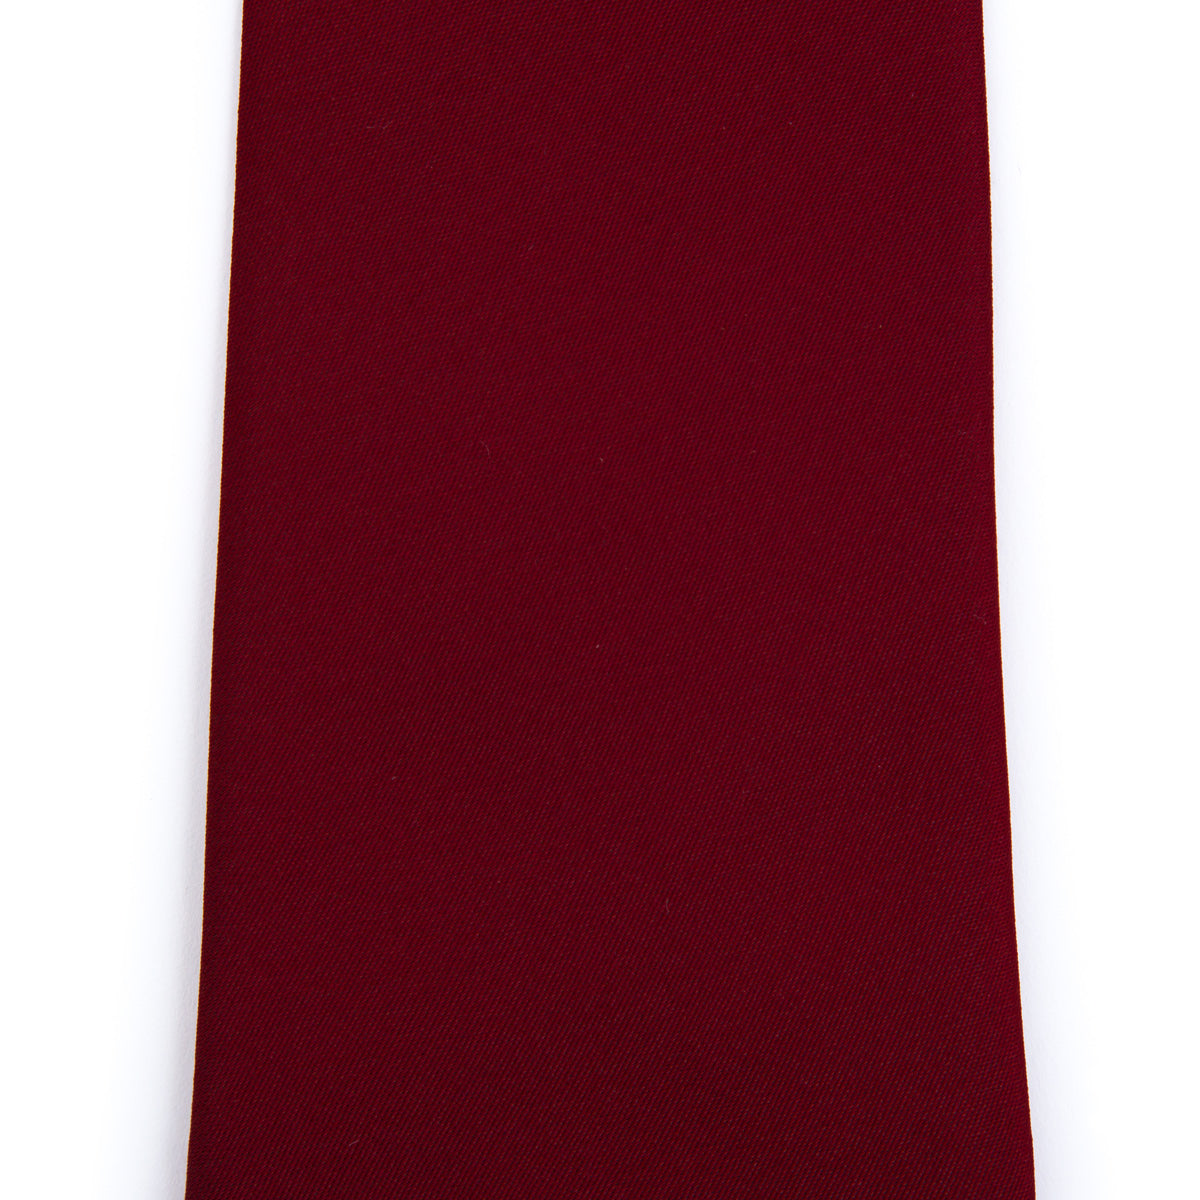 Persian red plain tie